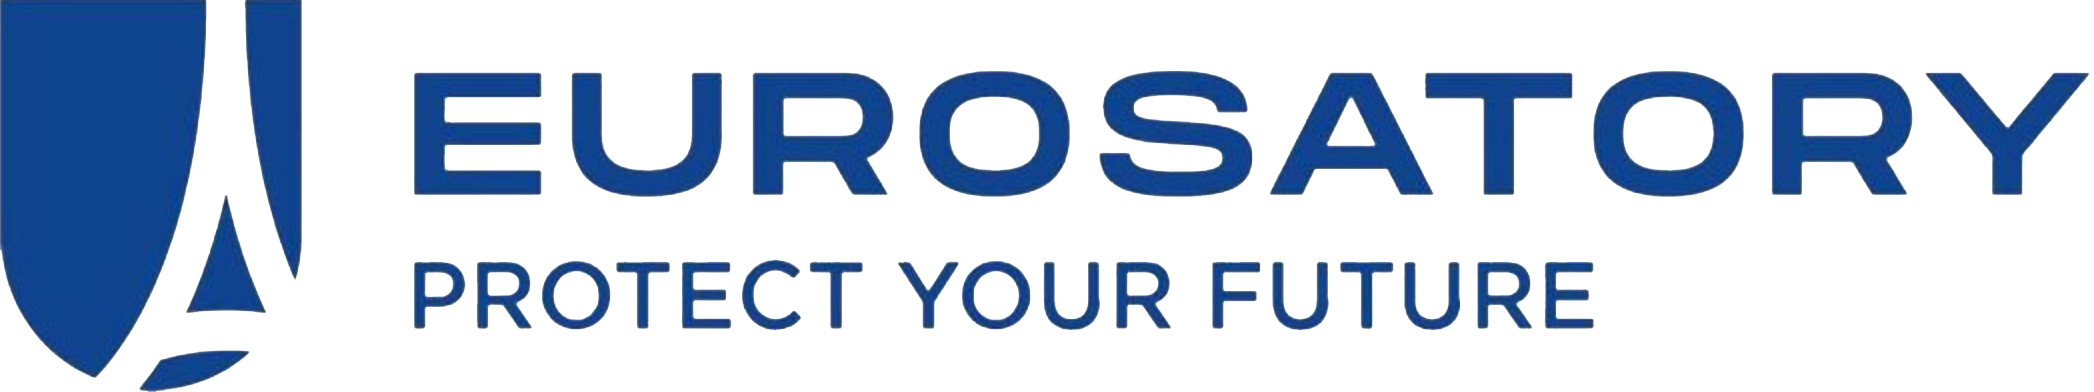 Eurosatory logo